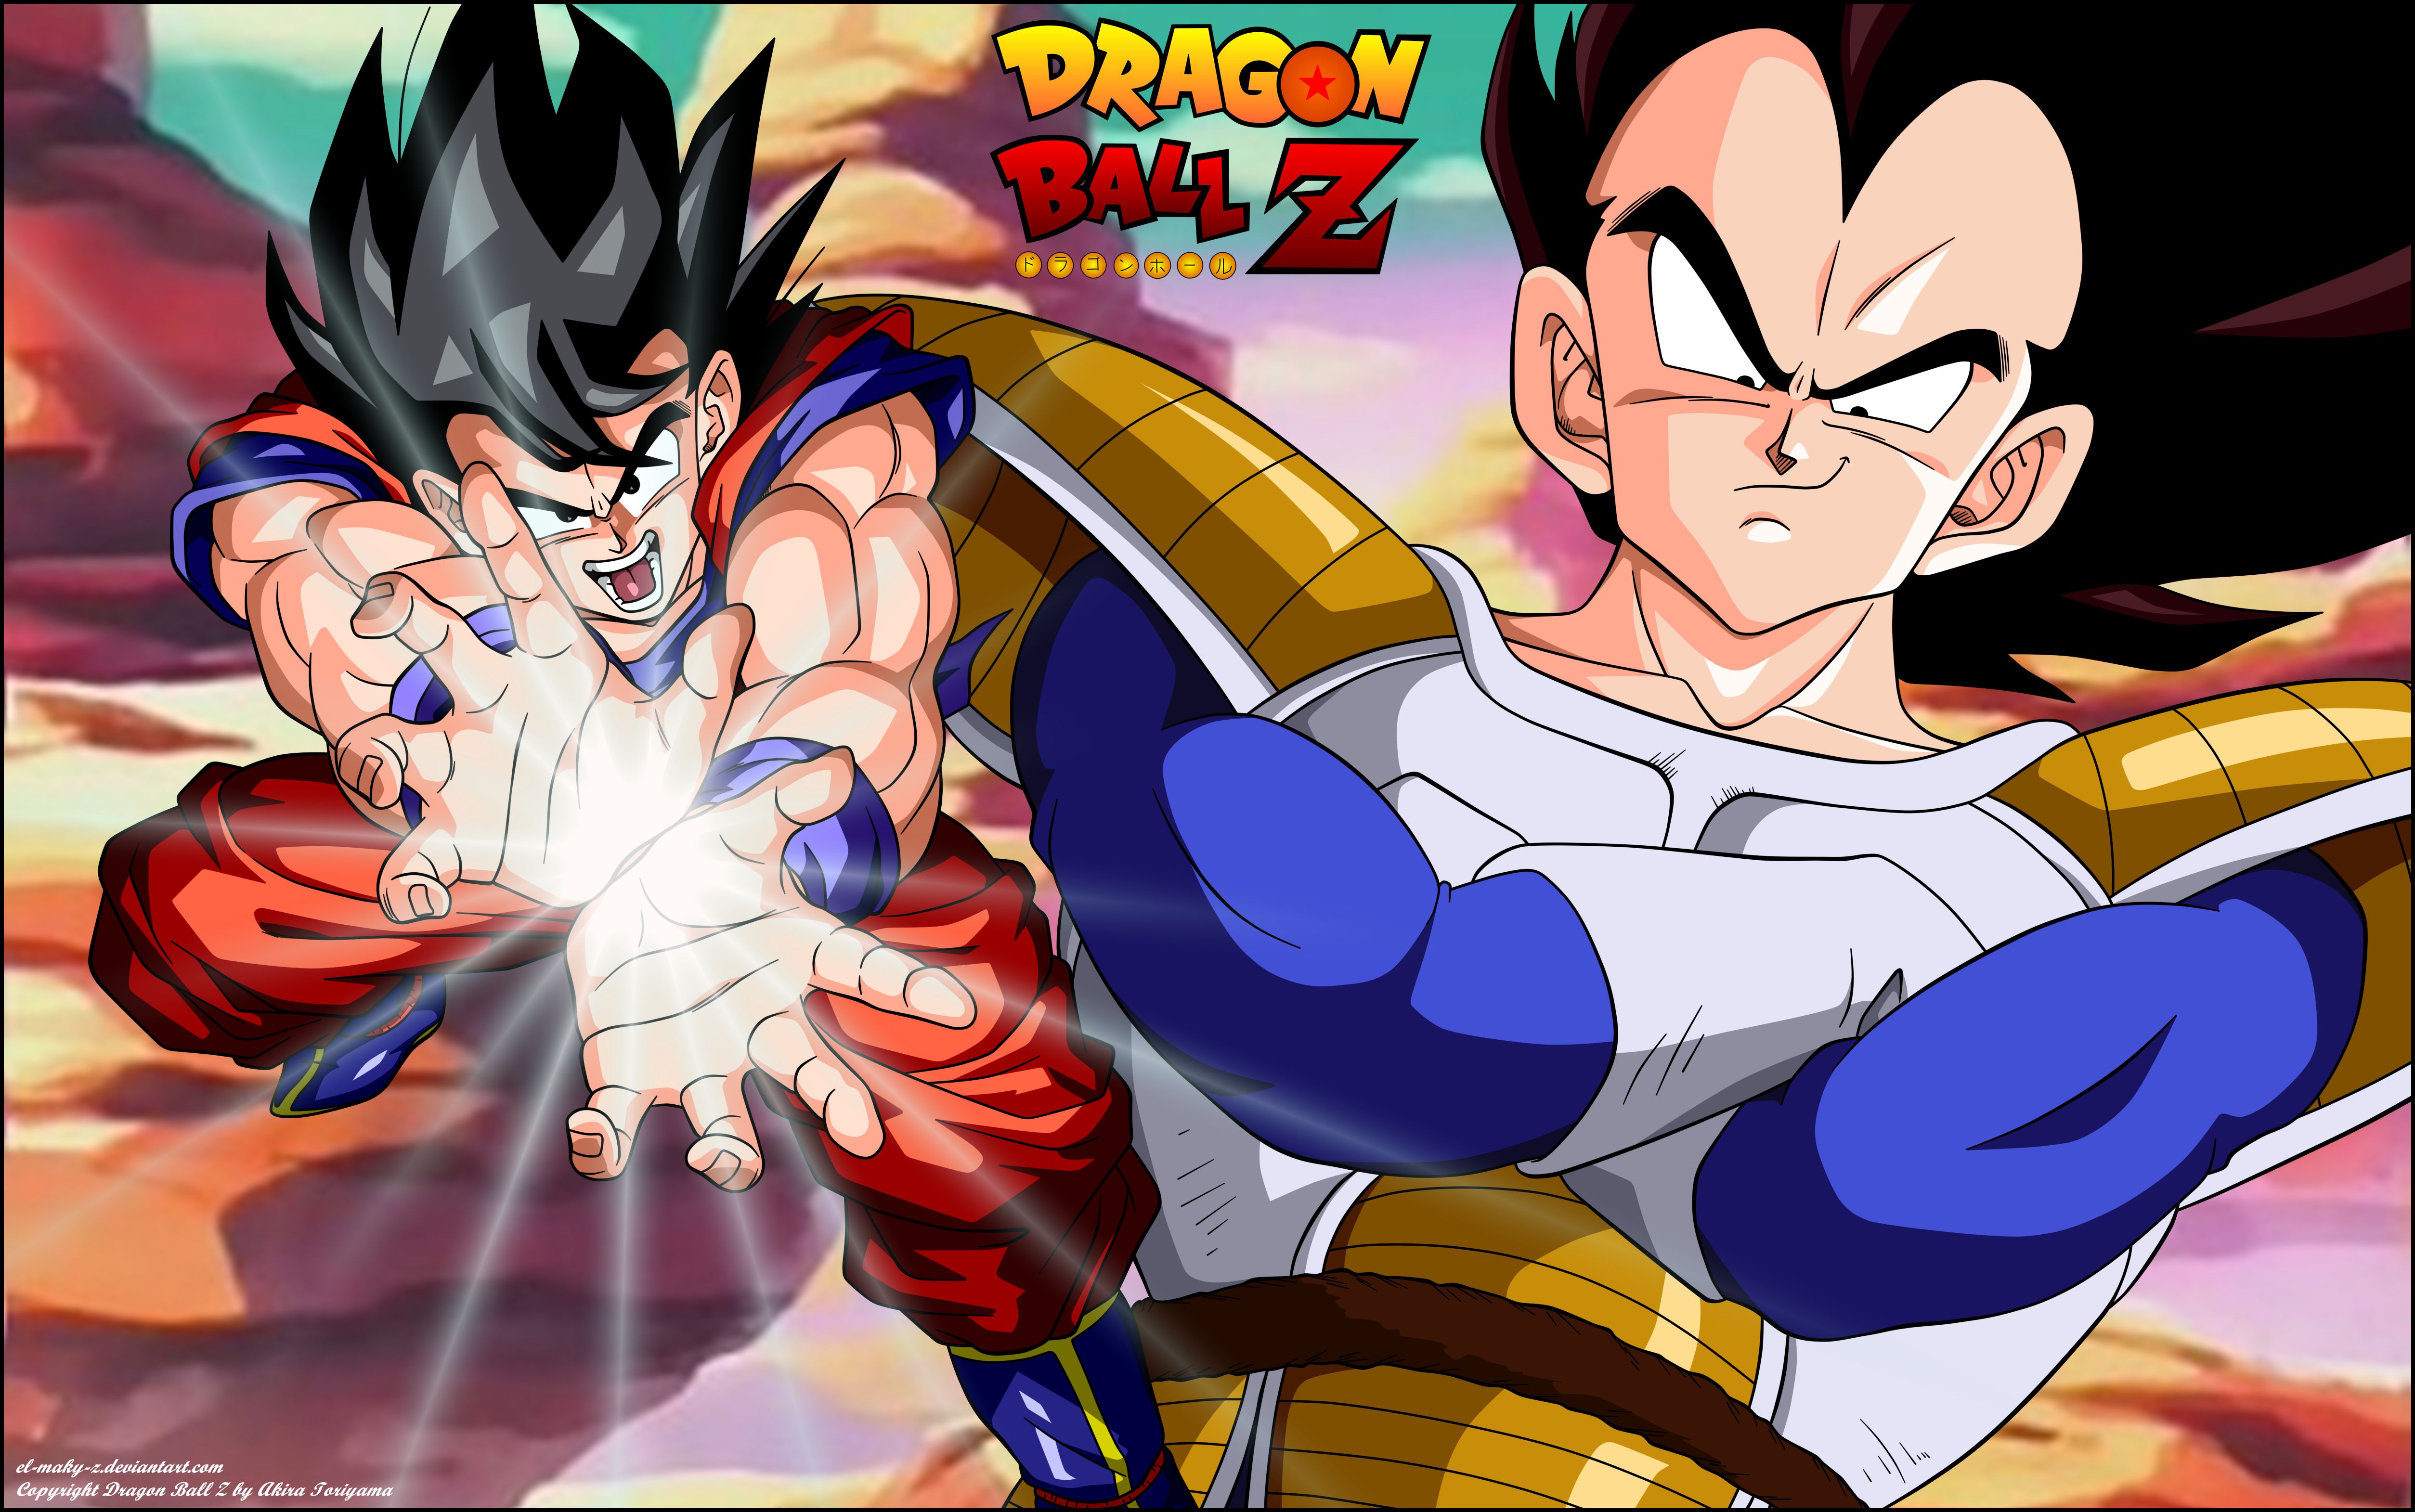 Descarga gratis la imagen Dragon Ball Z, Animado, Goku, Dragon Ball, Vegeta (Bola De Dragón) en el escritorio de tu PC